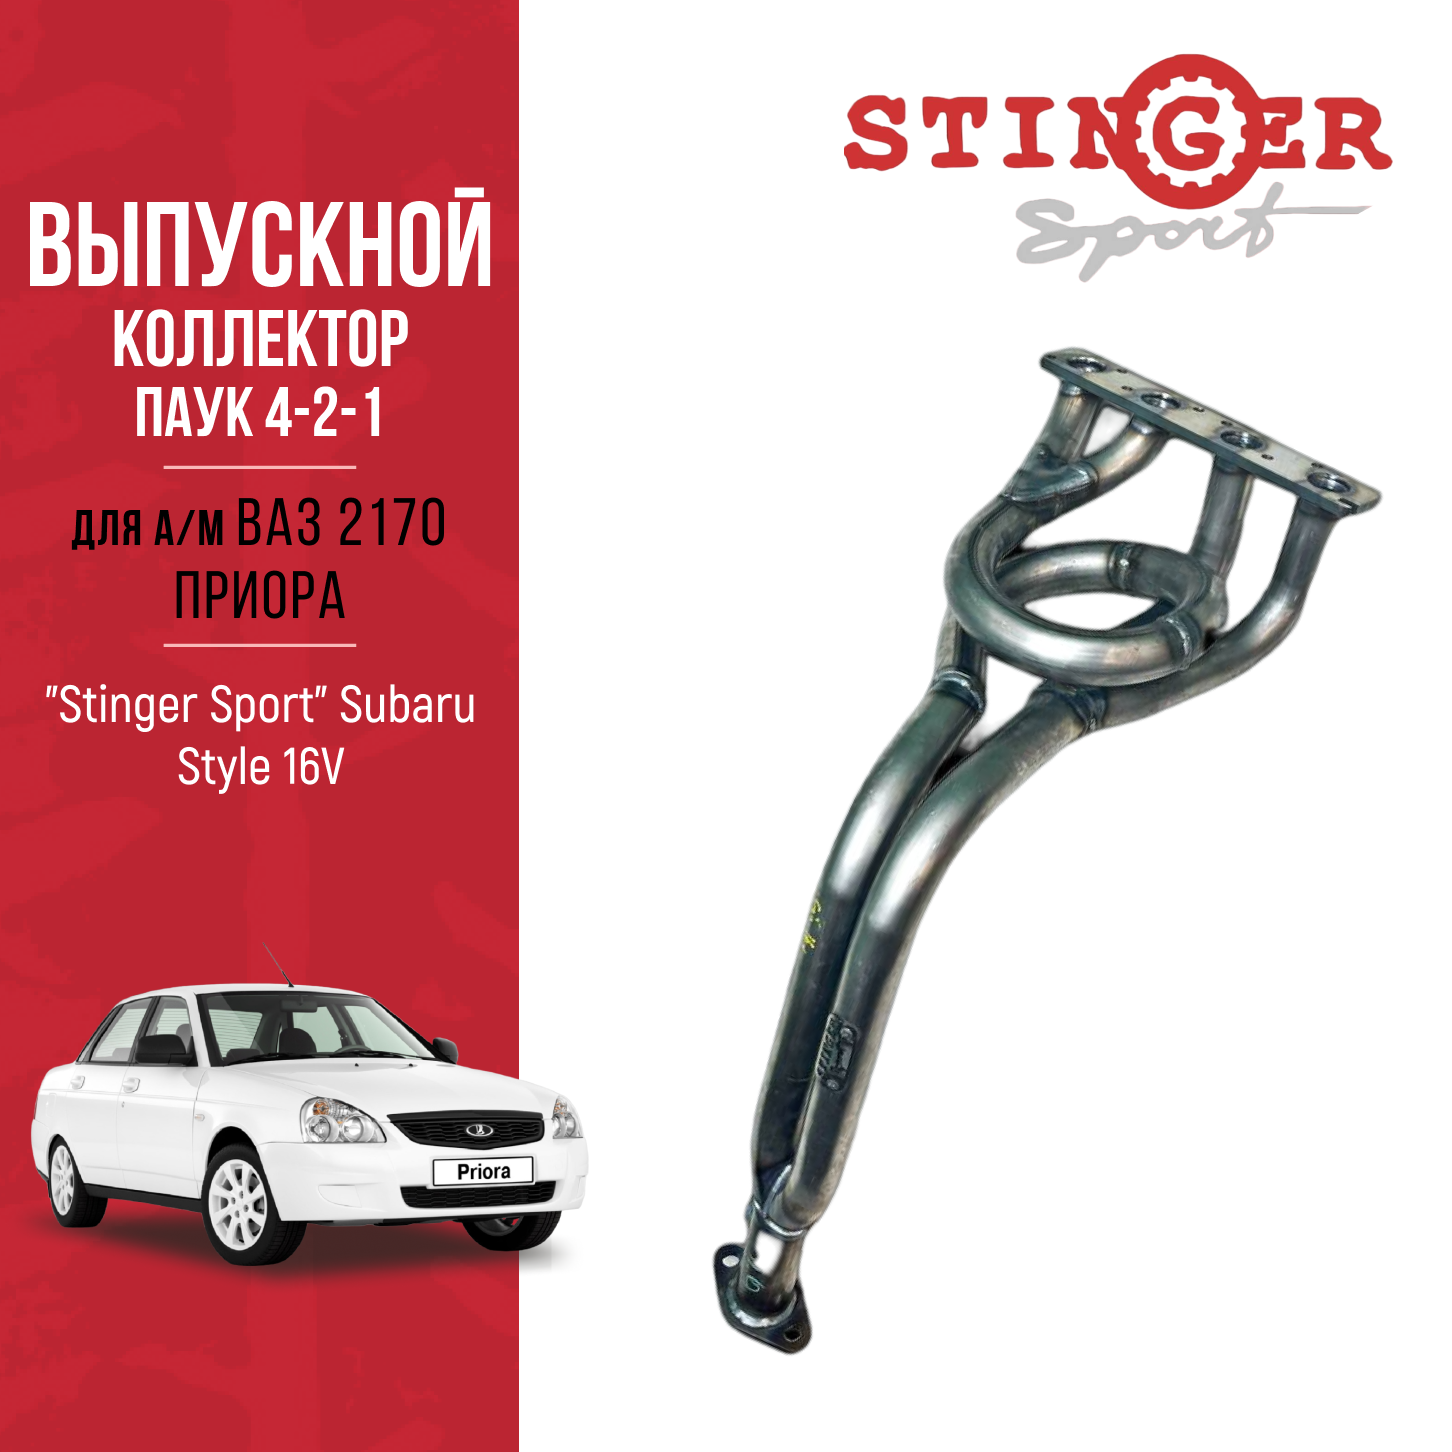 Выпускной коллектор/паук 4-2-1"Stinger Sport" 16V Subaru Style для а/м ВАЗ 2170 2110 16 1DK